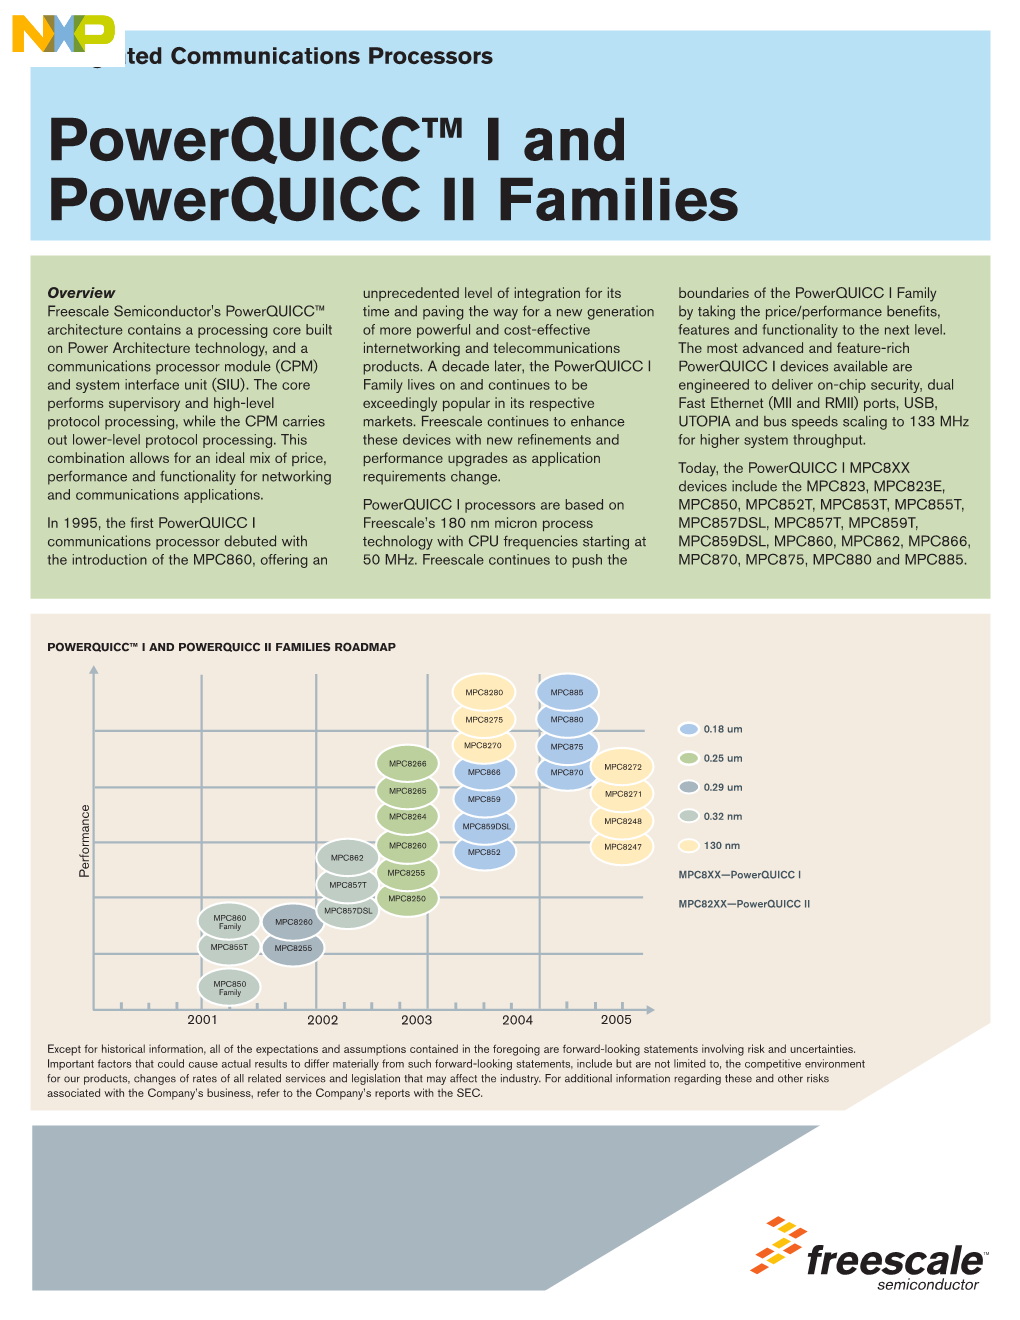 Powerquicc™ I and Powerquicc II Families